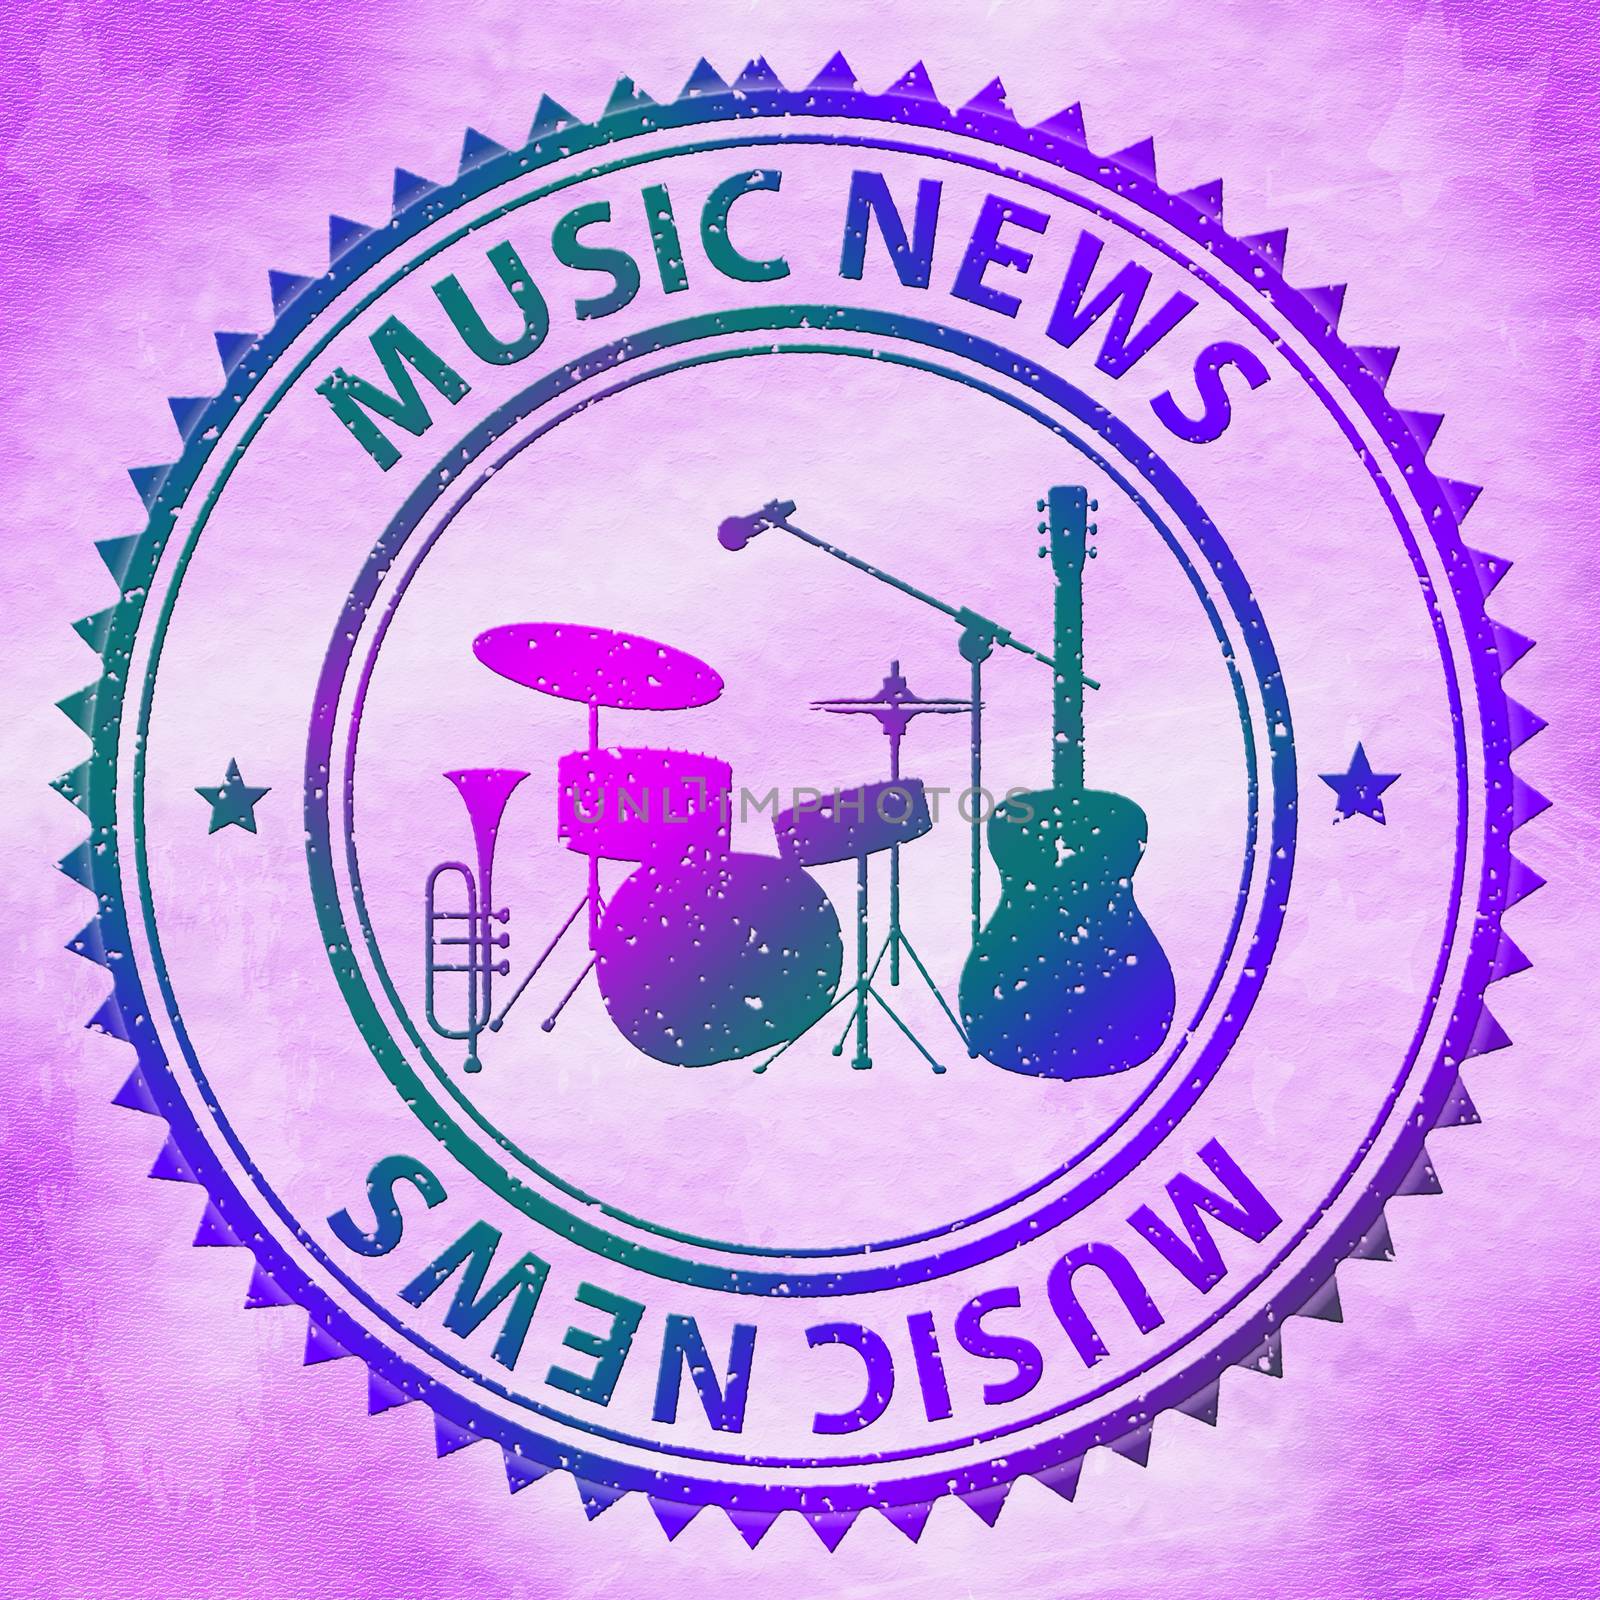 Music News Indicating Social Media And Article